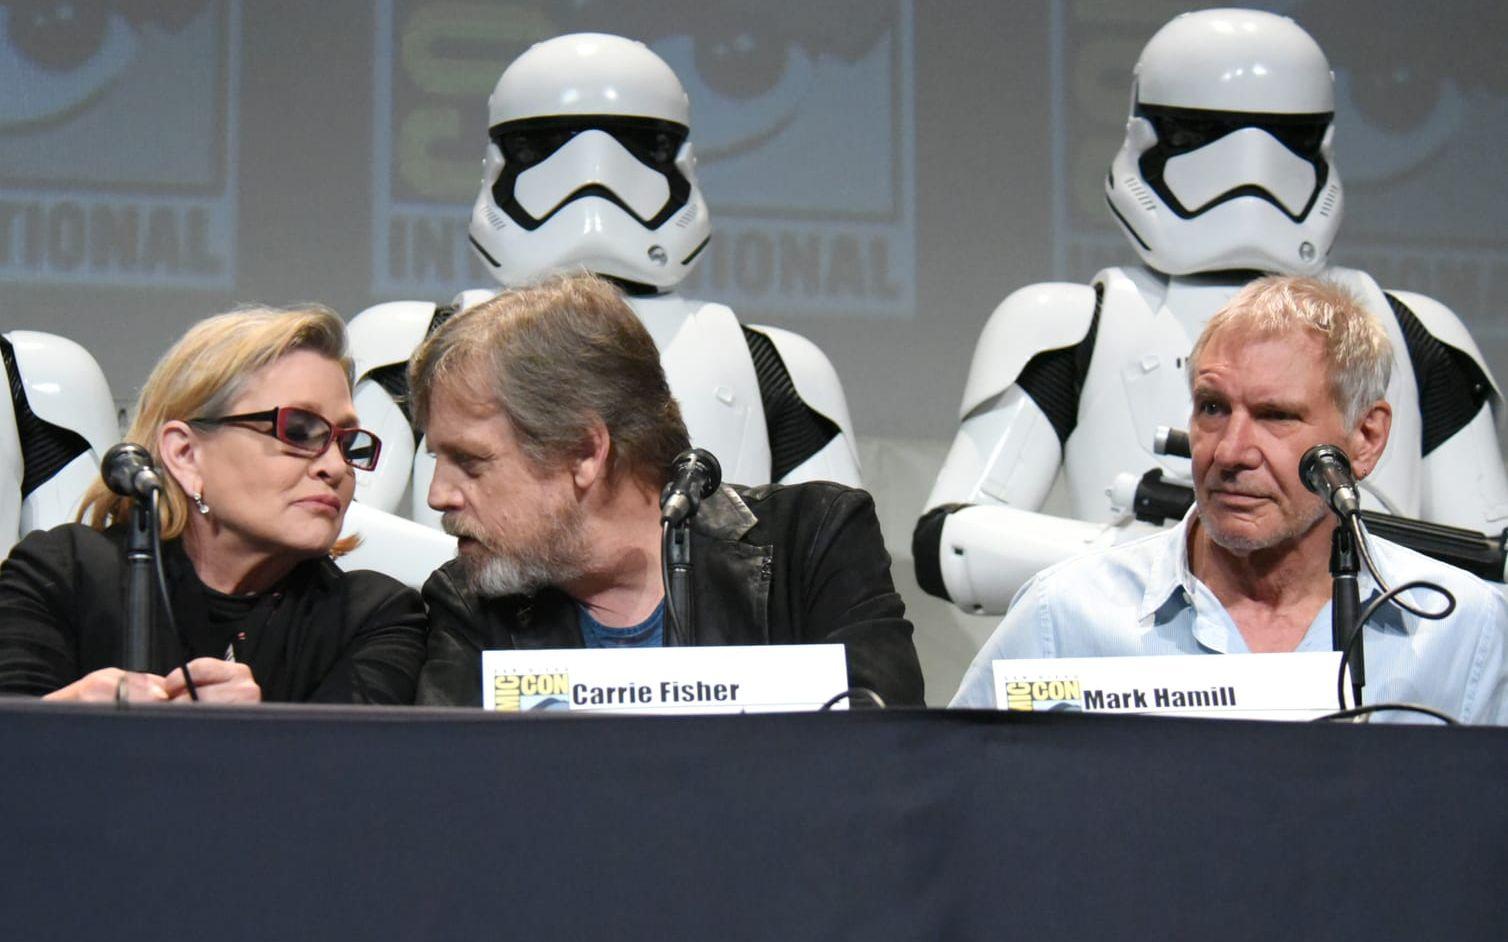 Carrie Fisher, Mark Hamill och Harrison Ford i ett panelsamtal på konventet Comic Con 2015. Bild: TT